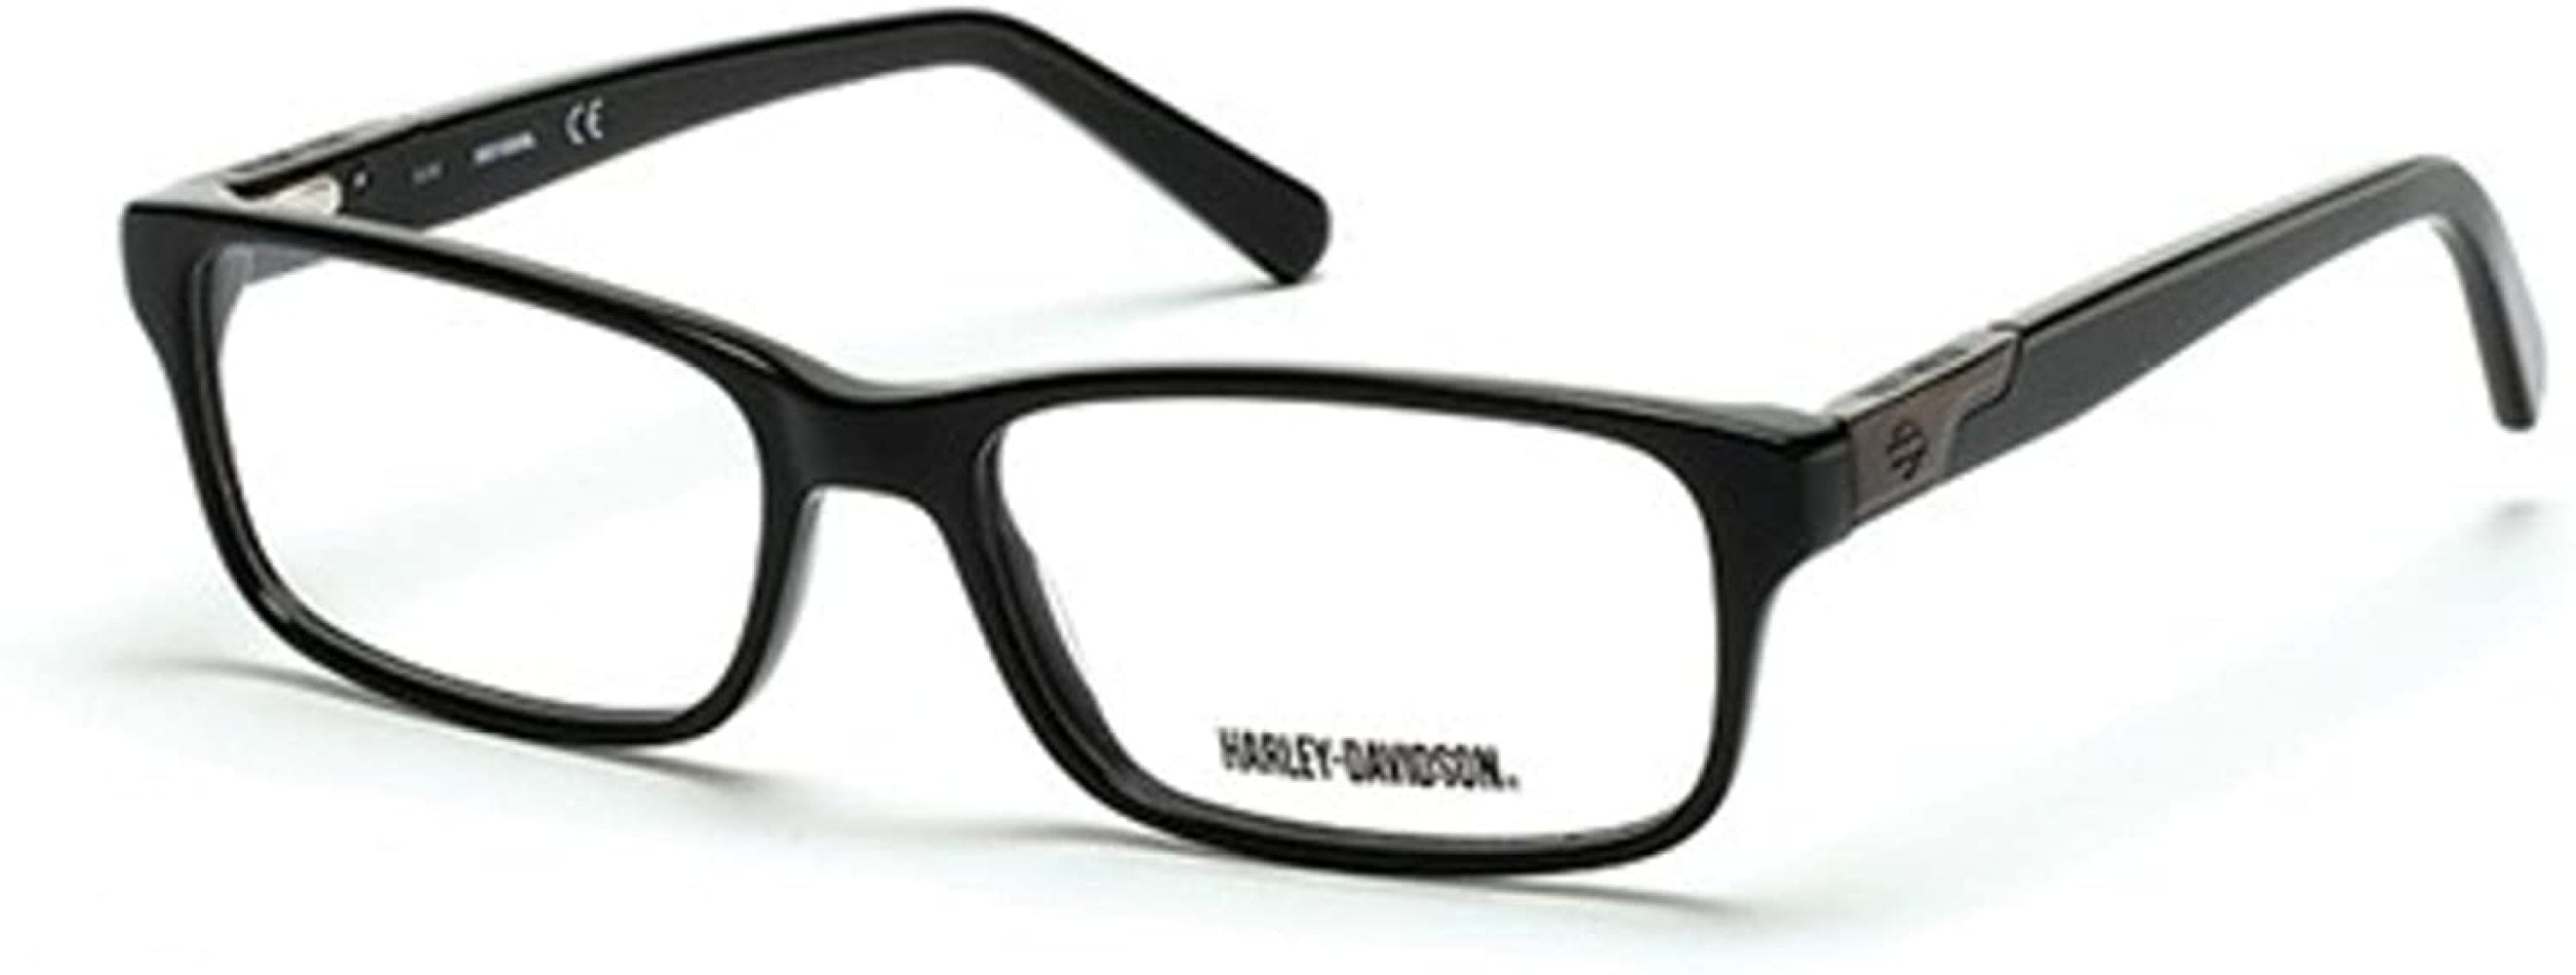 Eyeglasses Harley Davidson HD 762 HD 0762 002 matte black